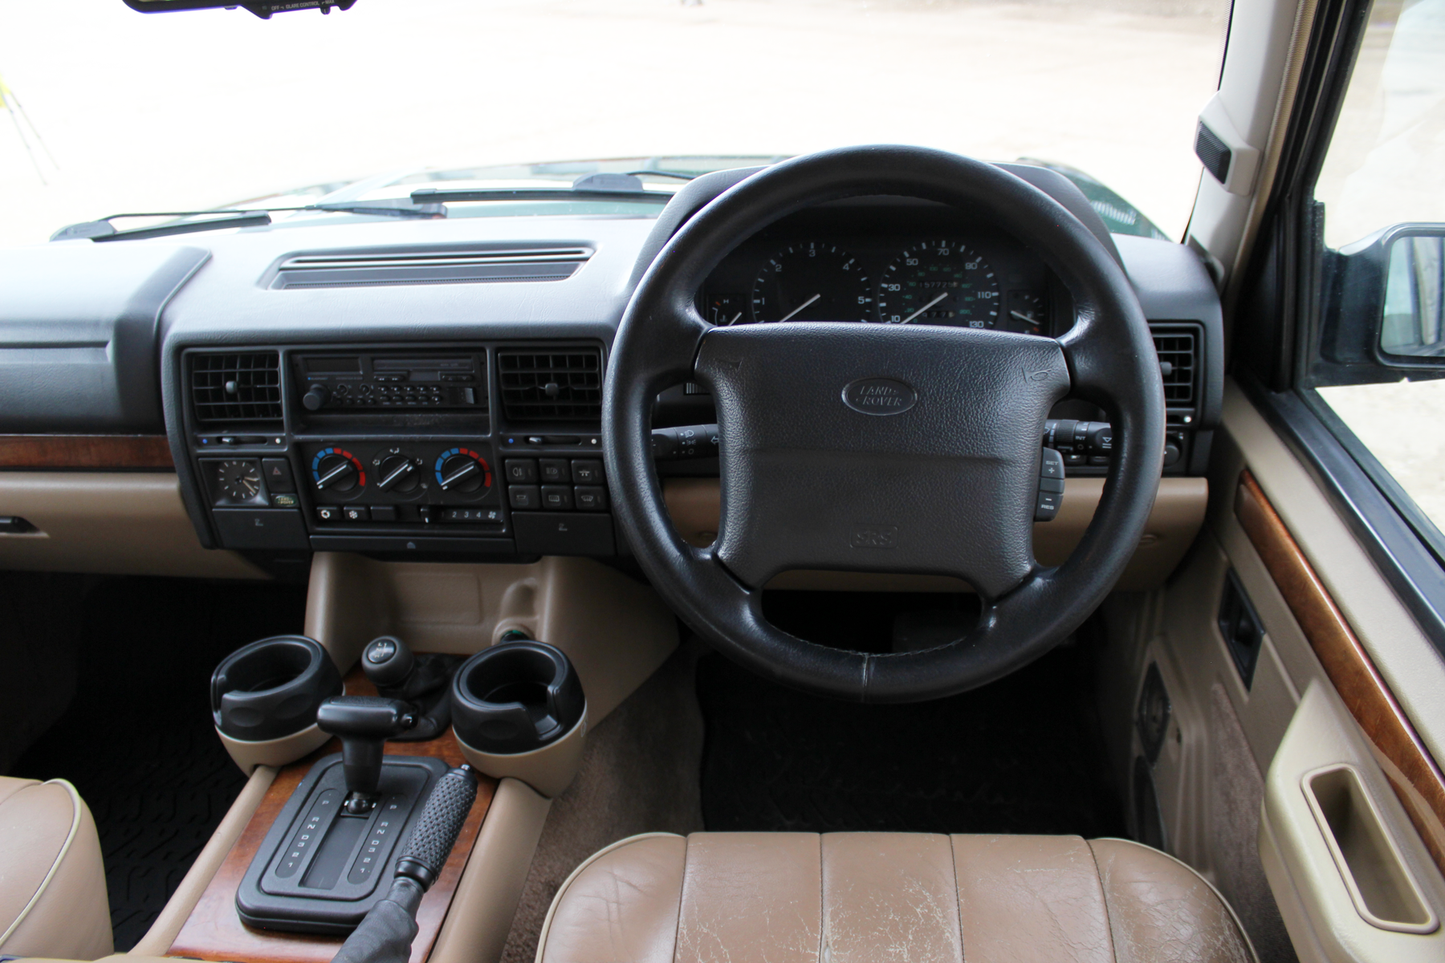 1995 Range Rover Classic - Soft Dash